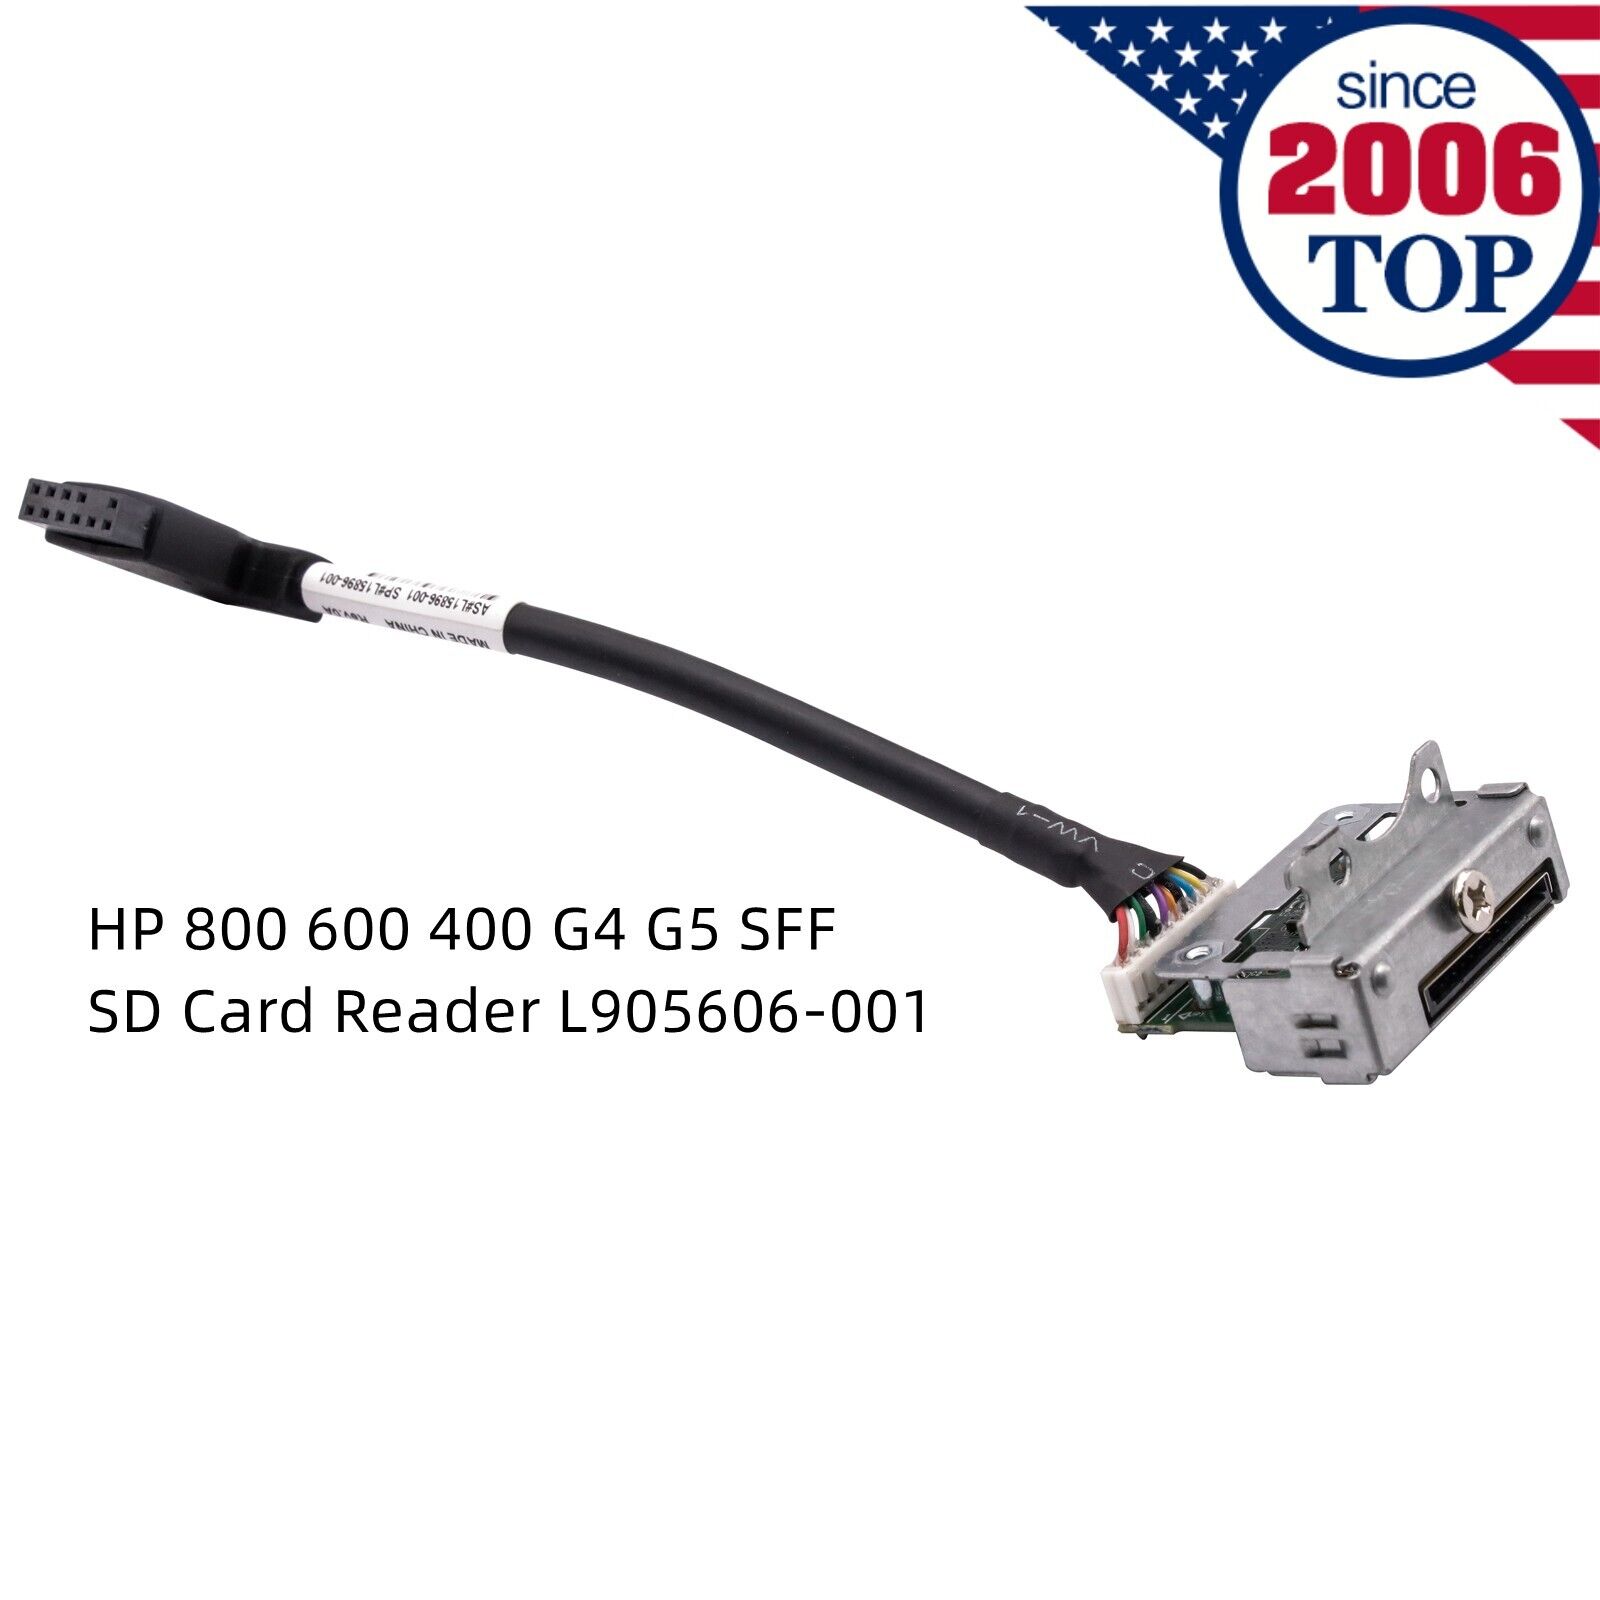 USB3.0 SD4 SFF SD Card Reader Board for HP 800 600 400 G4 L905606-001 L15896-001